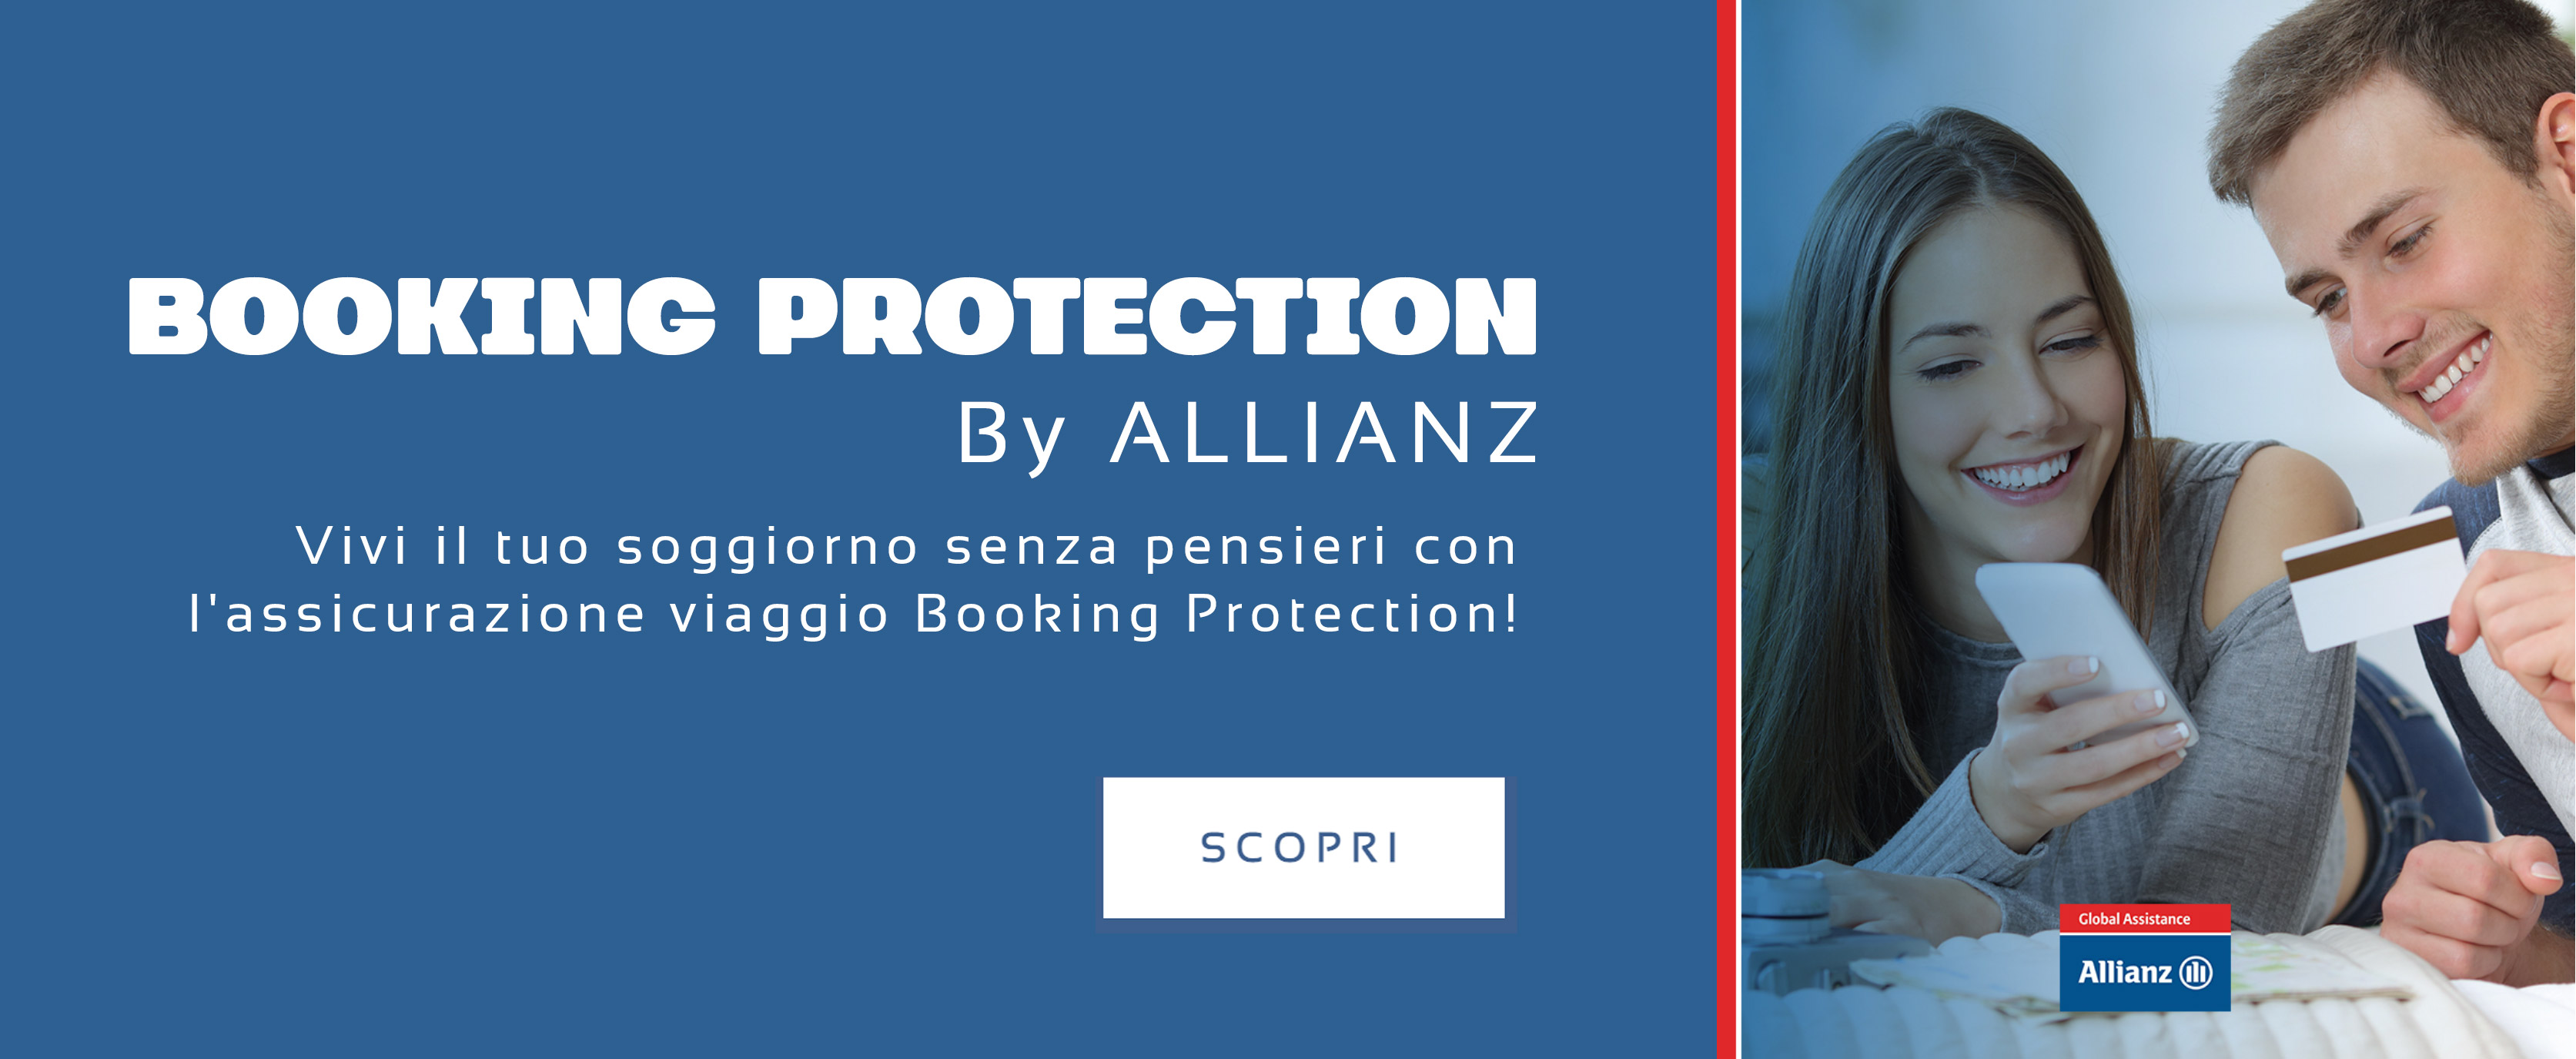 booking protection Allianz